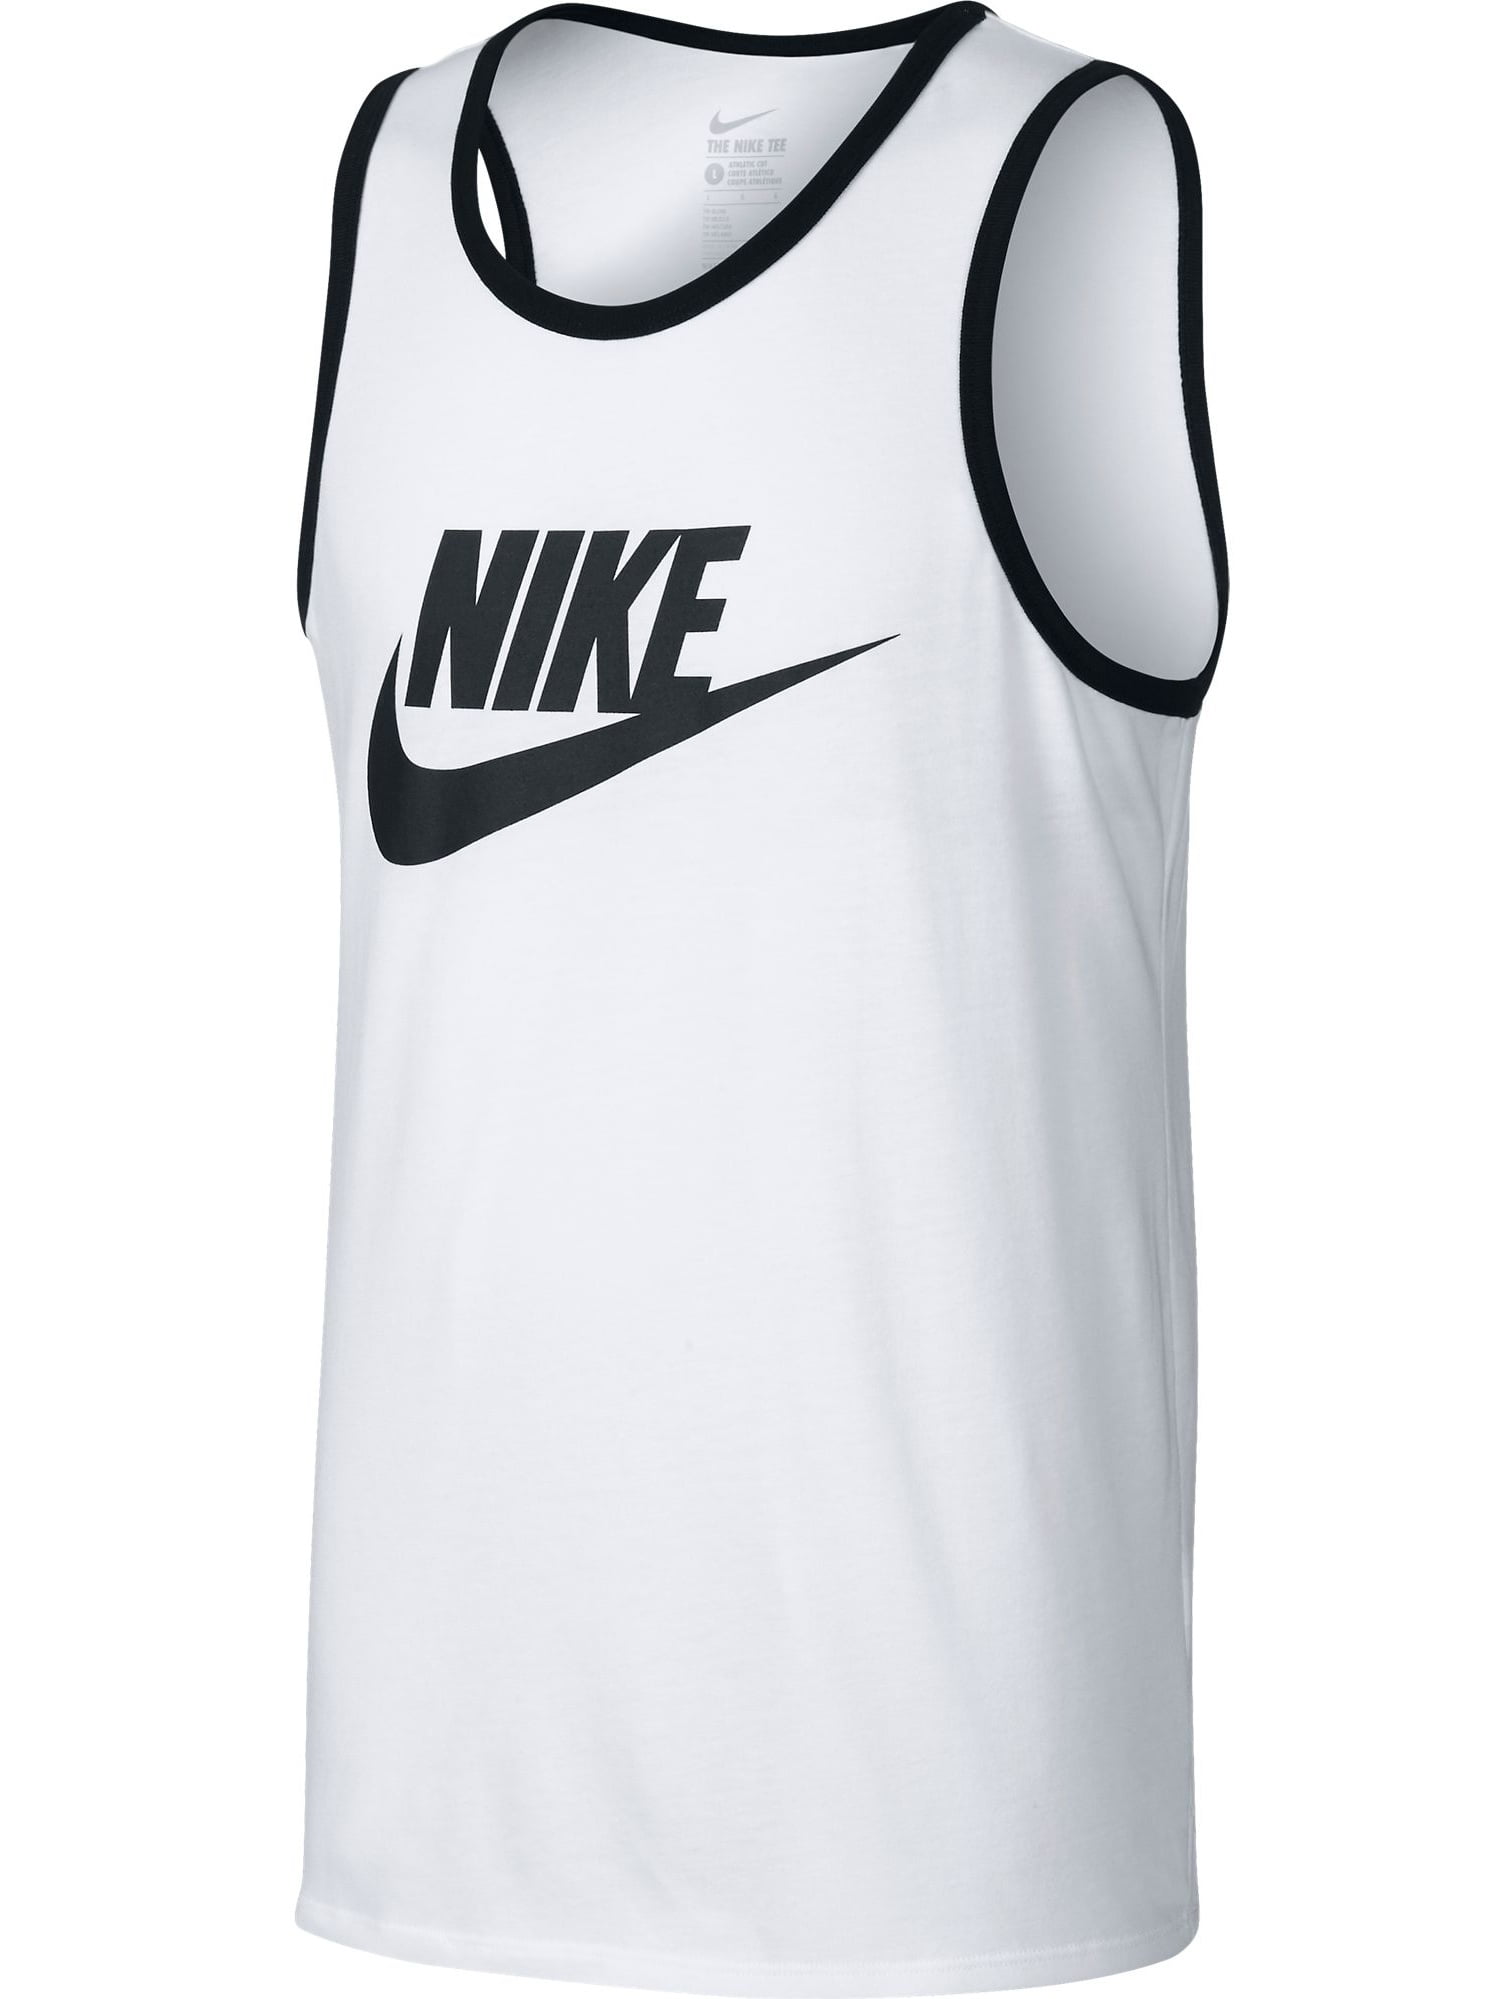 Nike ACE Logo Men's Tank Top Athletic White/Black 779234-100 - Walmart.com